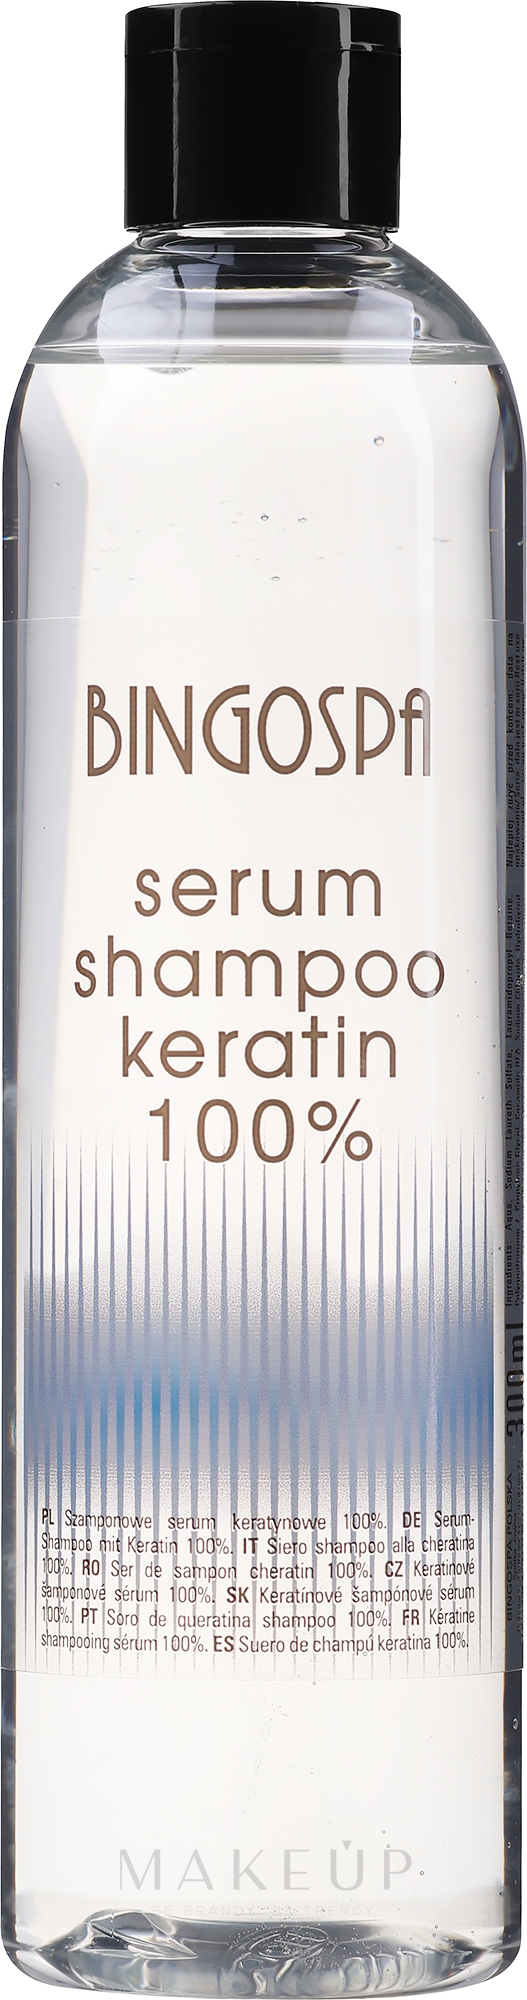 Serum-Shampoo mit Keratin - BingoSpa Shampoo-Serum 100% Keratin — Foto 300 ml